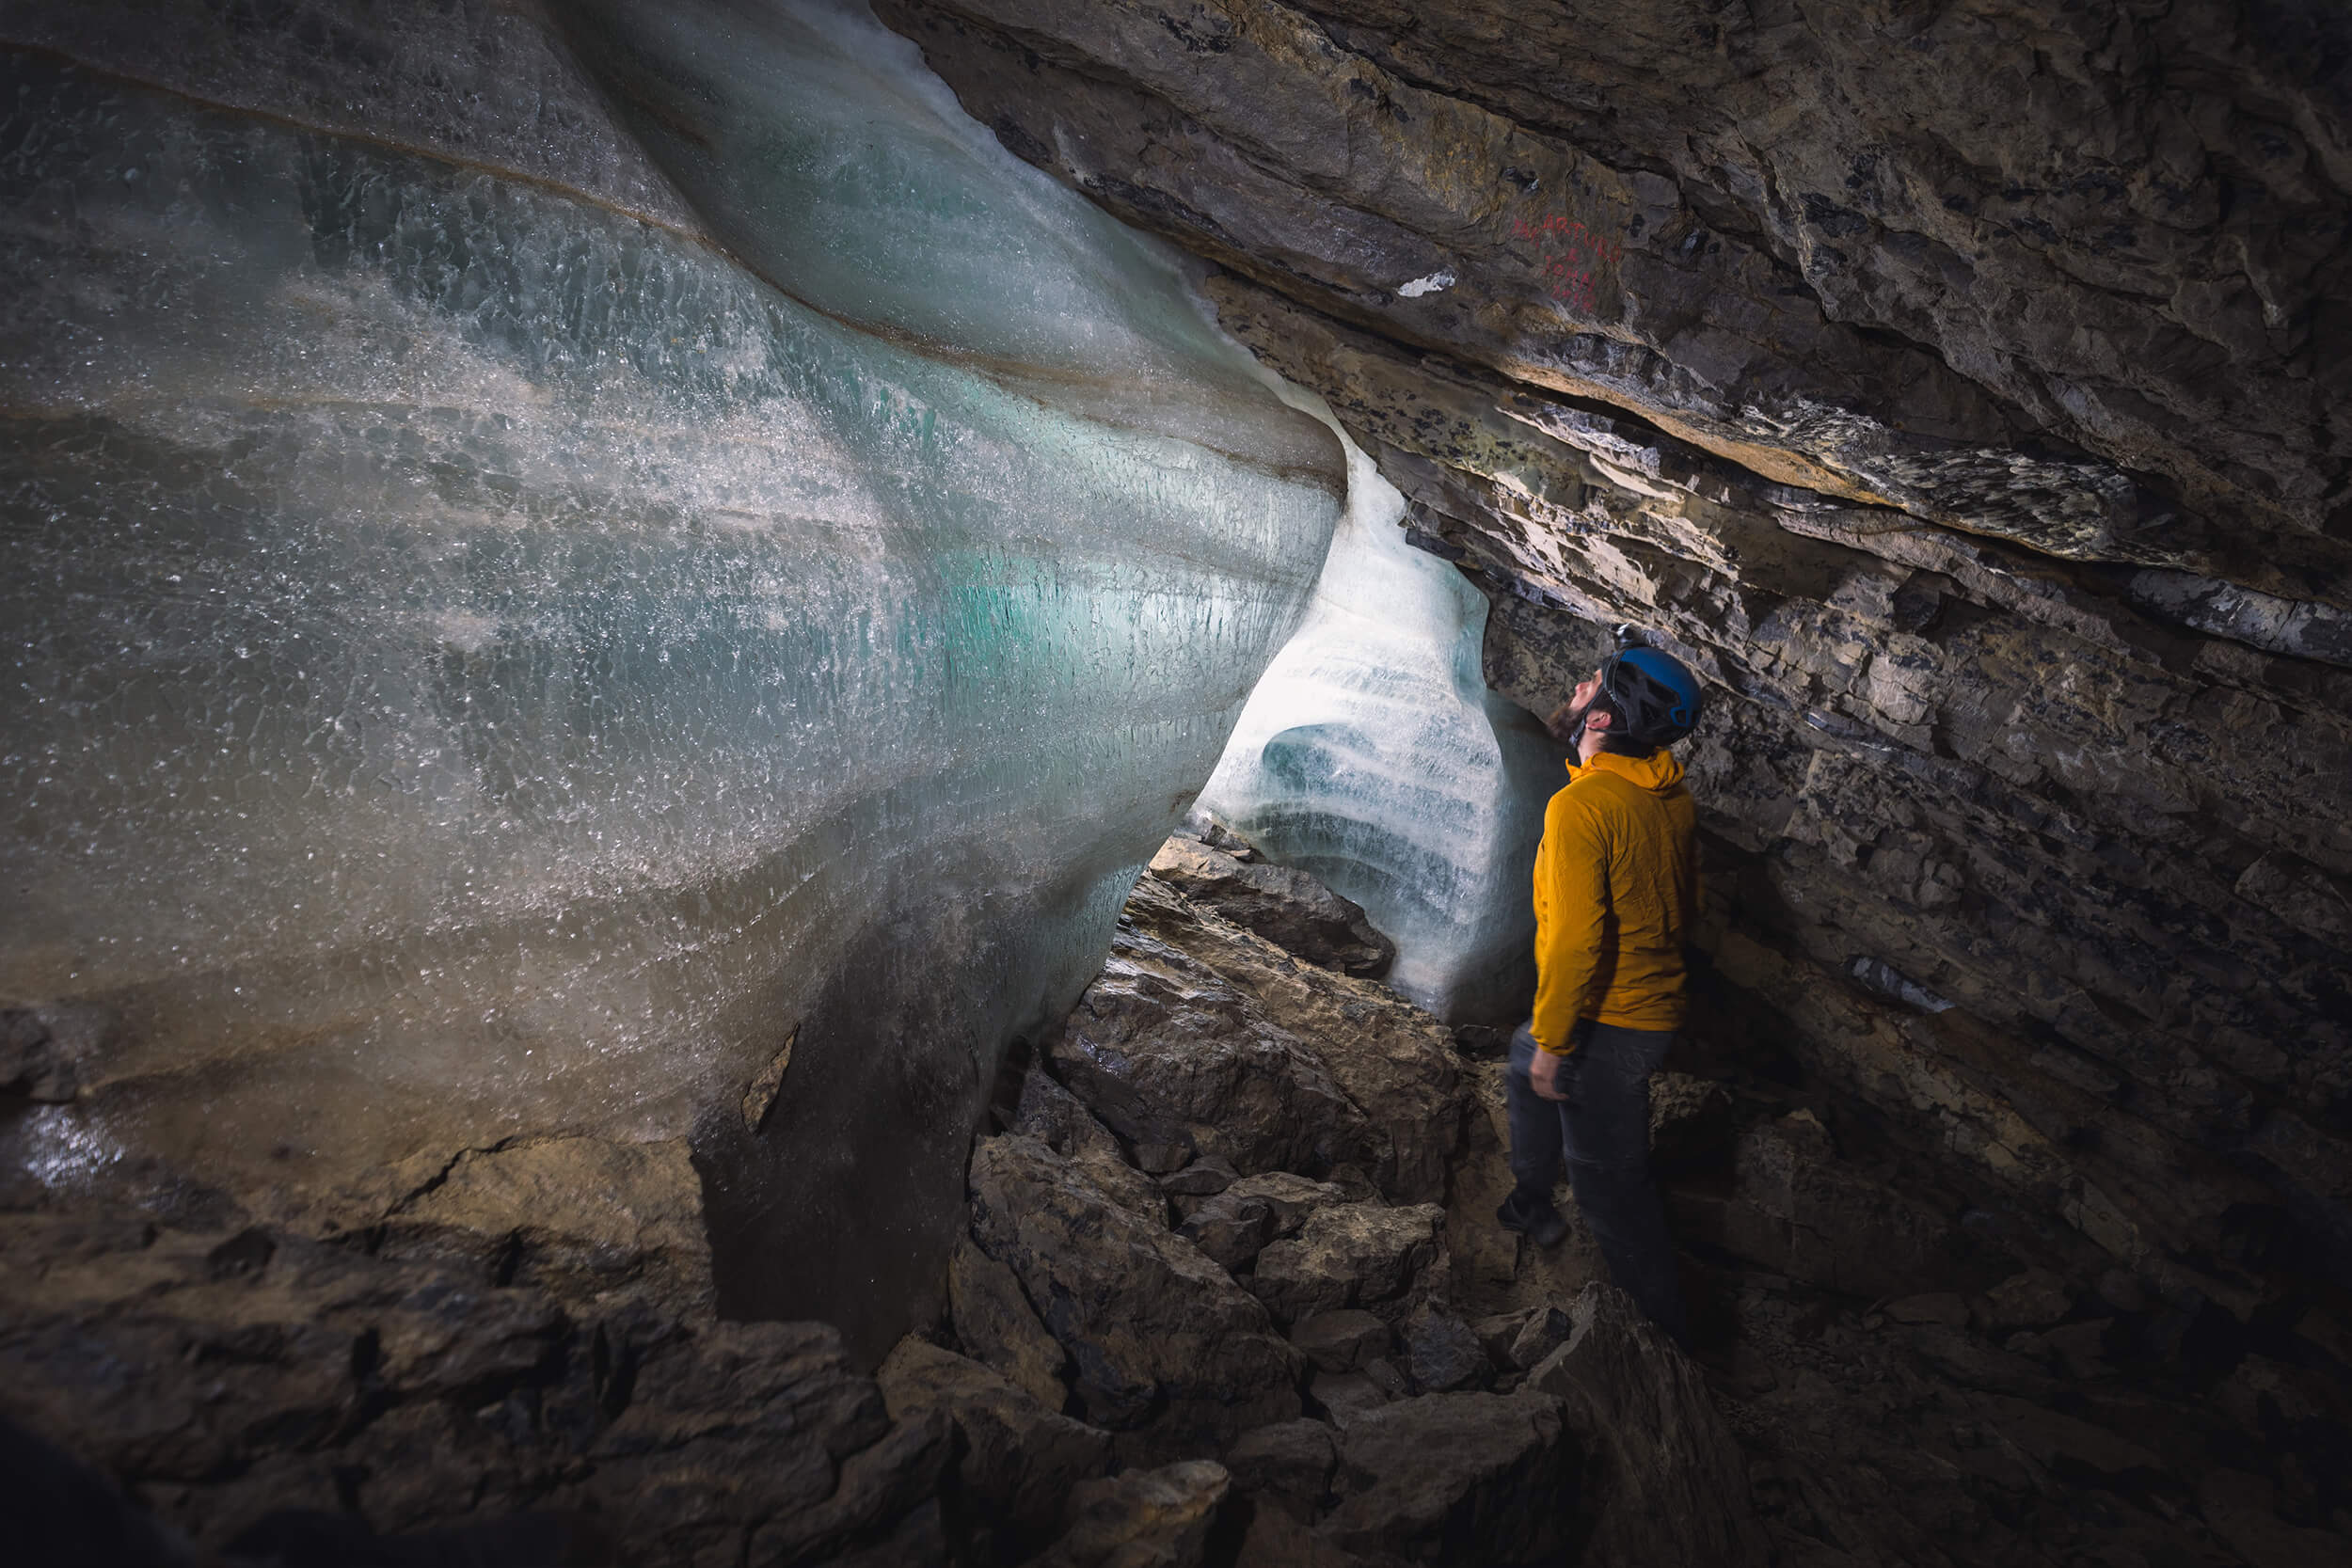 Canyon Creek Ice Cave in Kananaskis